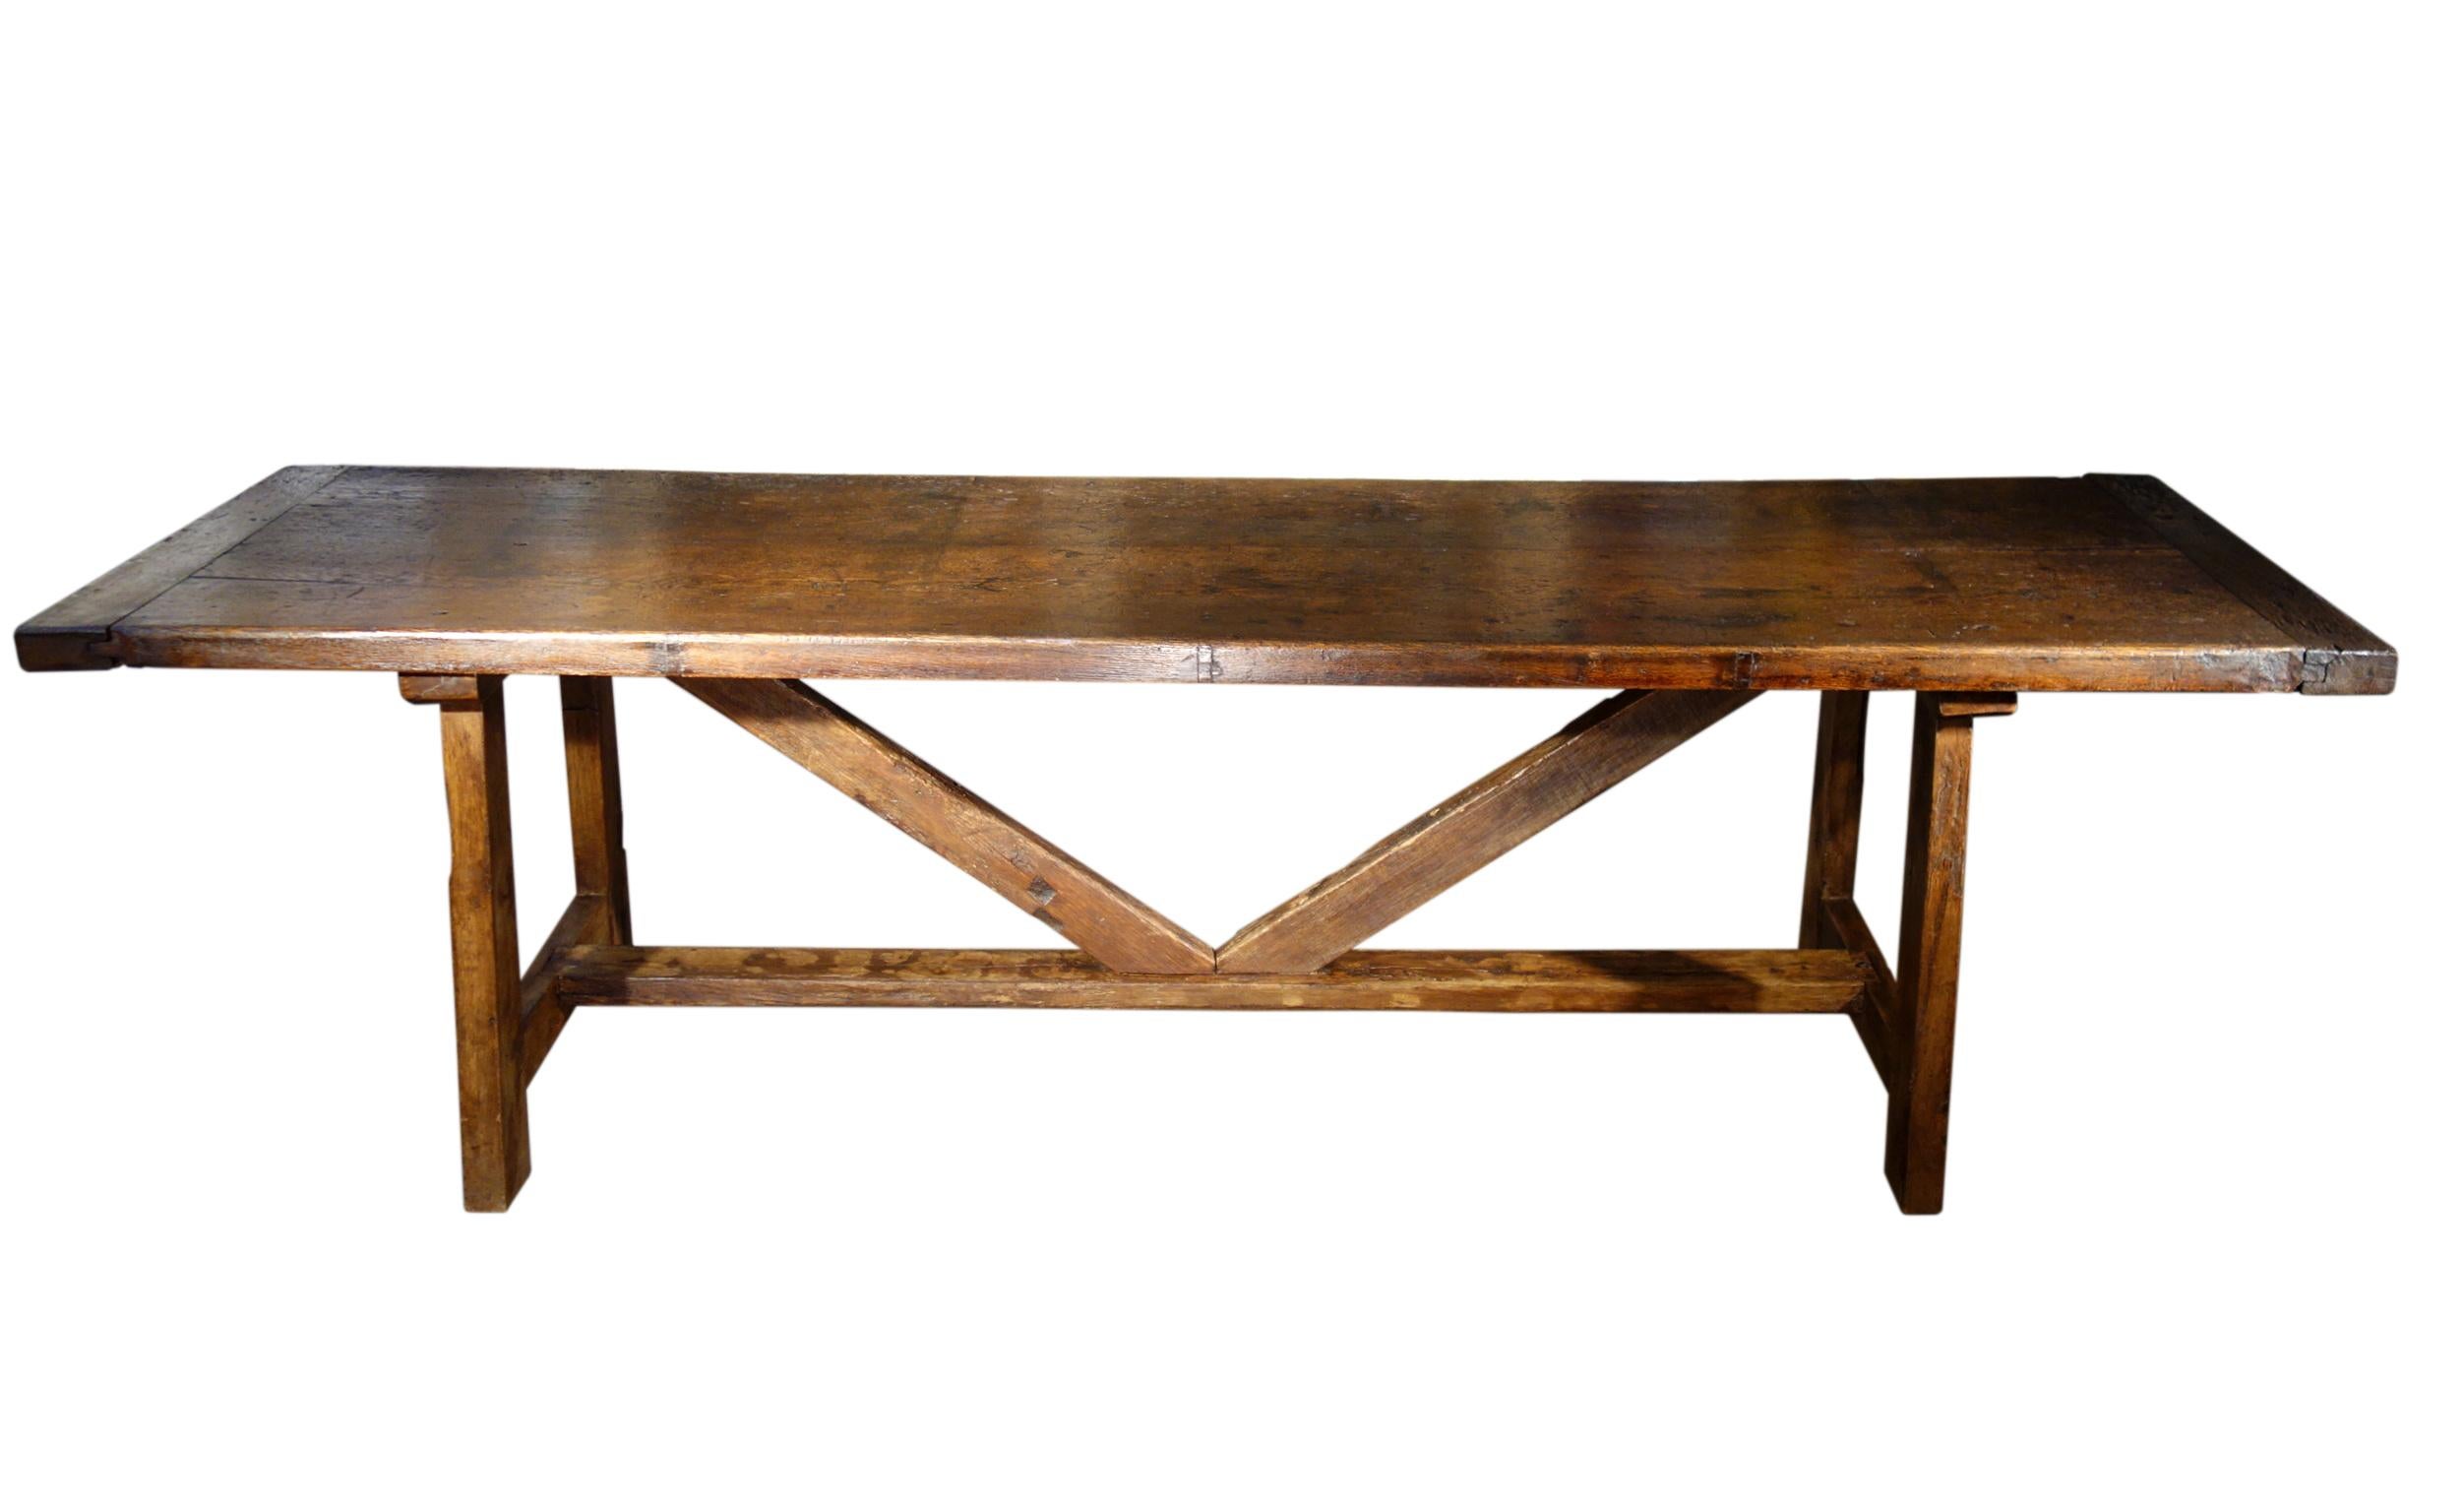 Primitive Late 17th C Italian Chestnut Trestle Table Available Custom Reproduction Sizes